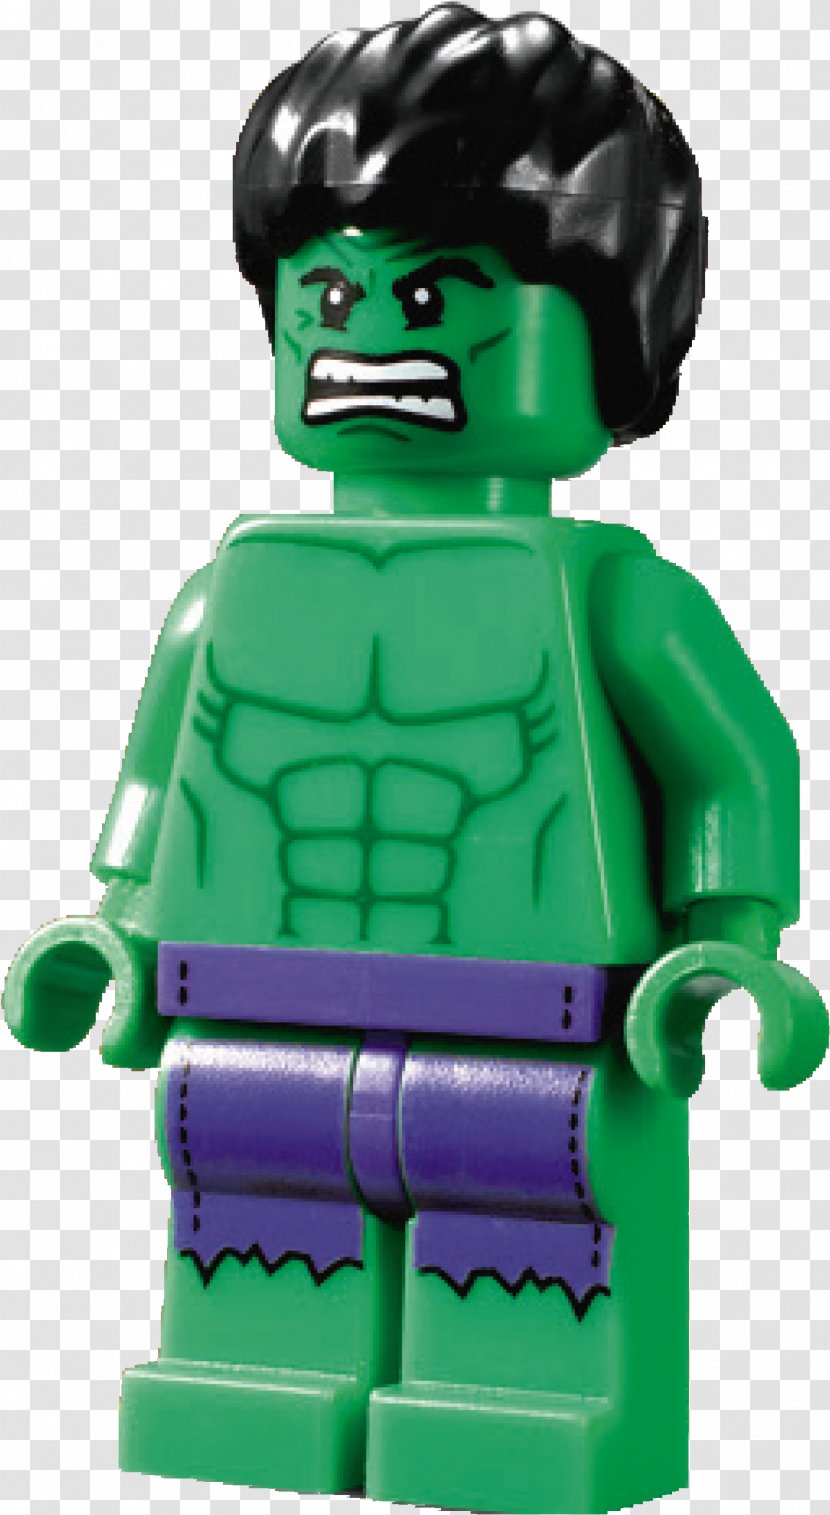 Hulk Lego Marvel Super Heroes Minifigure - Toy Block Transparent PNG